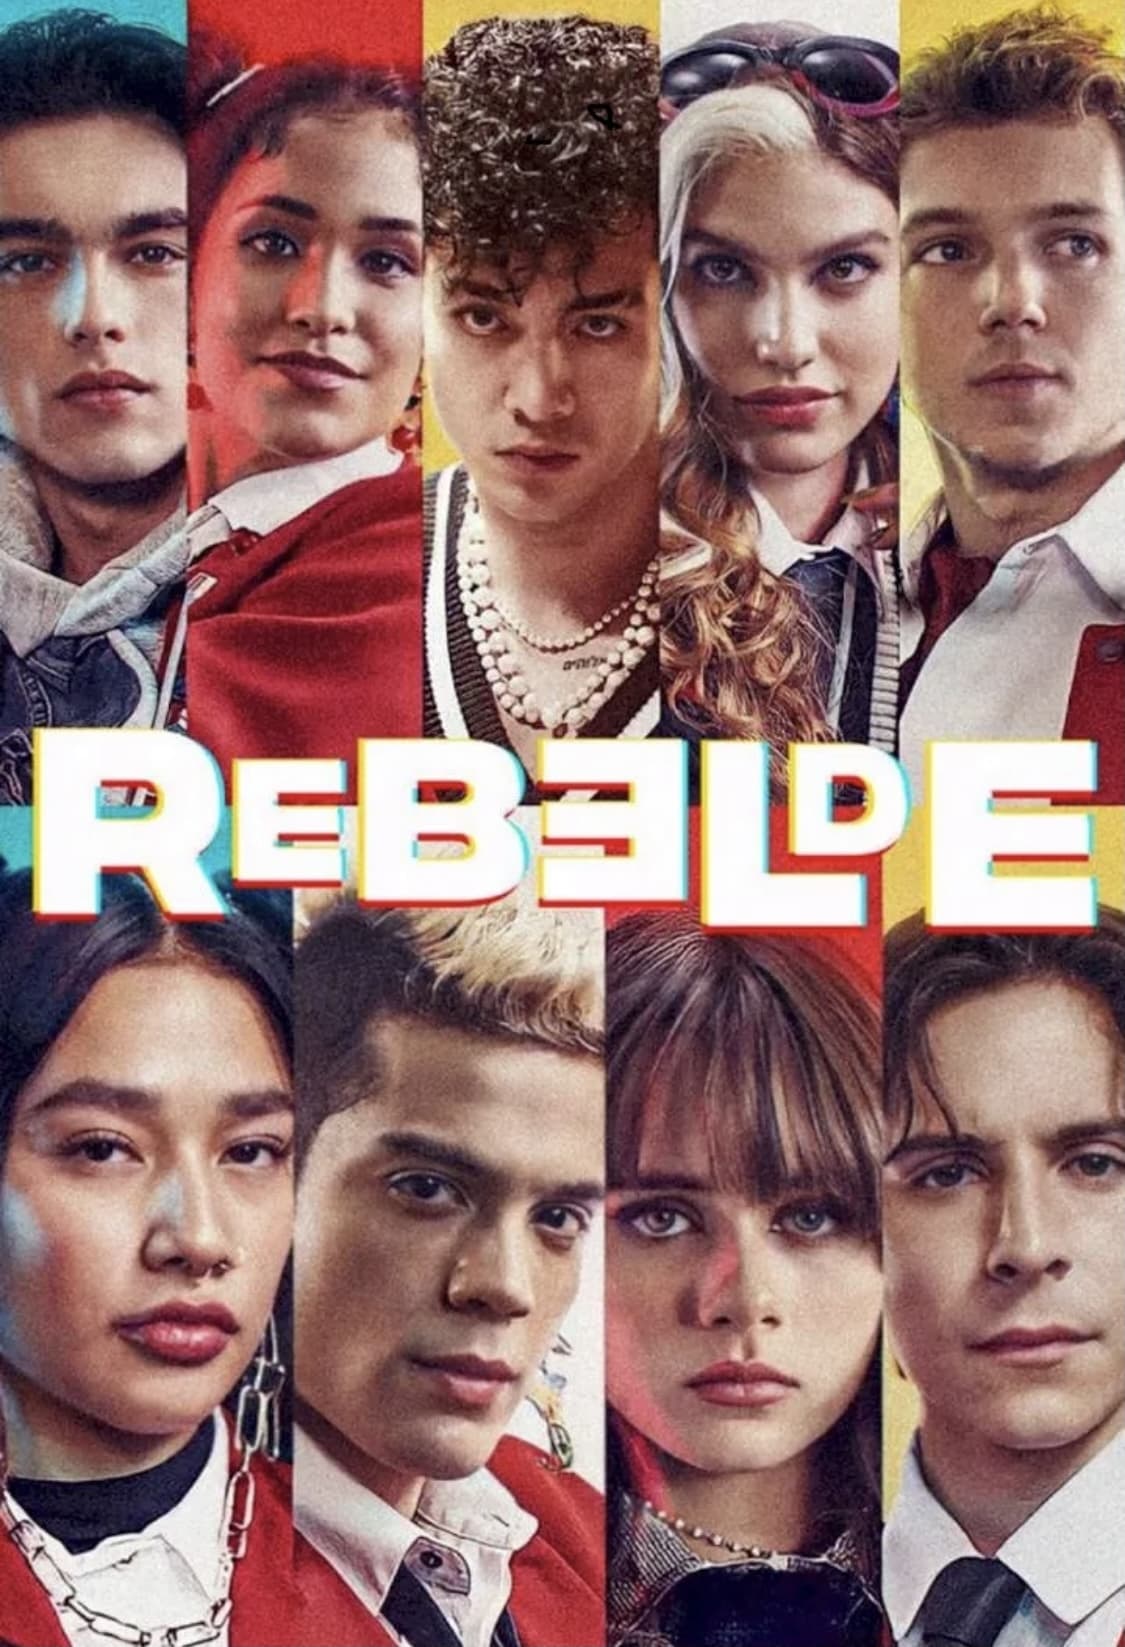 Rebelde Season 2